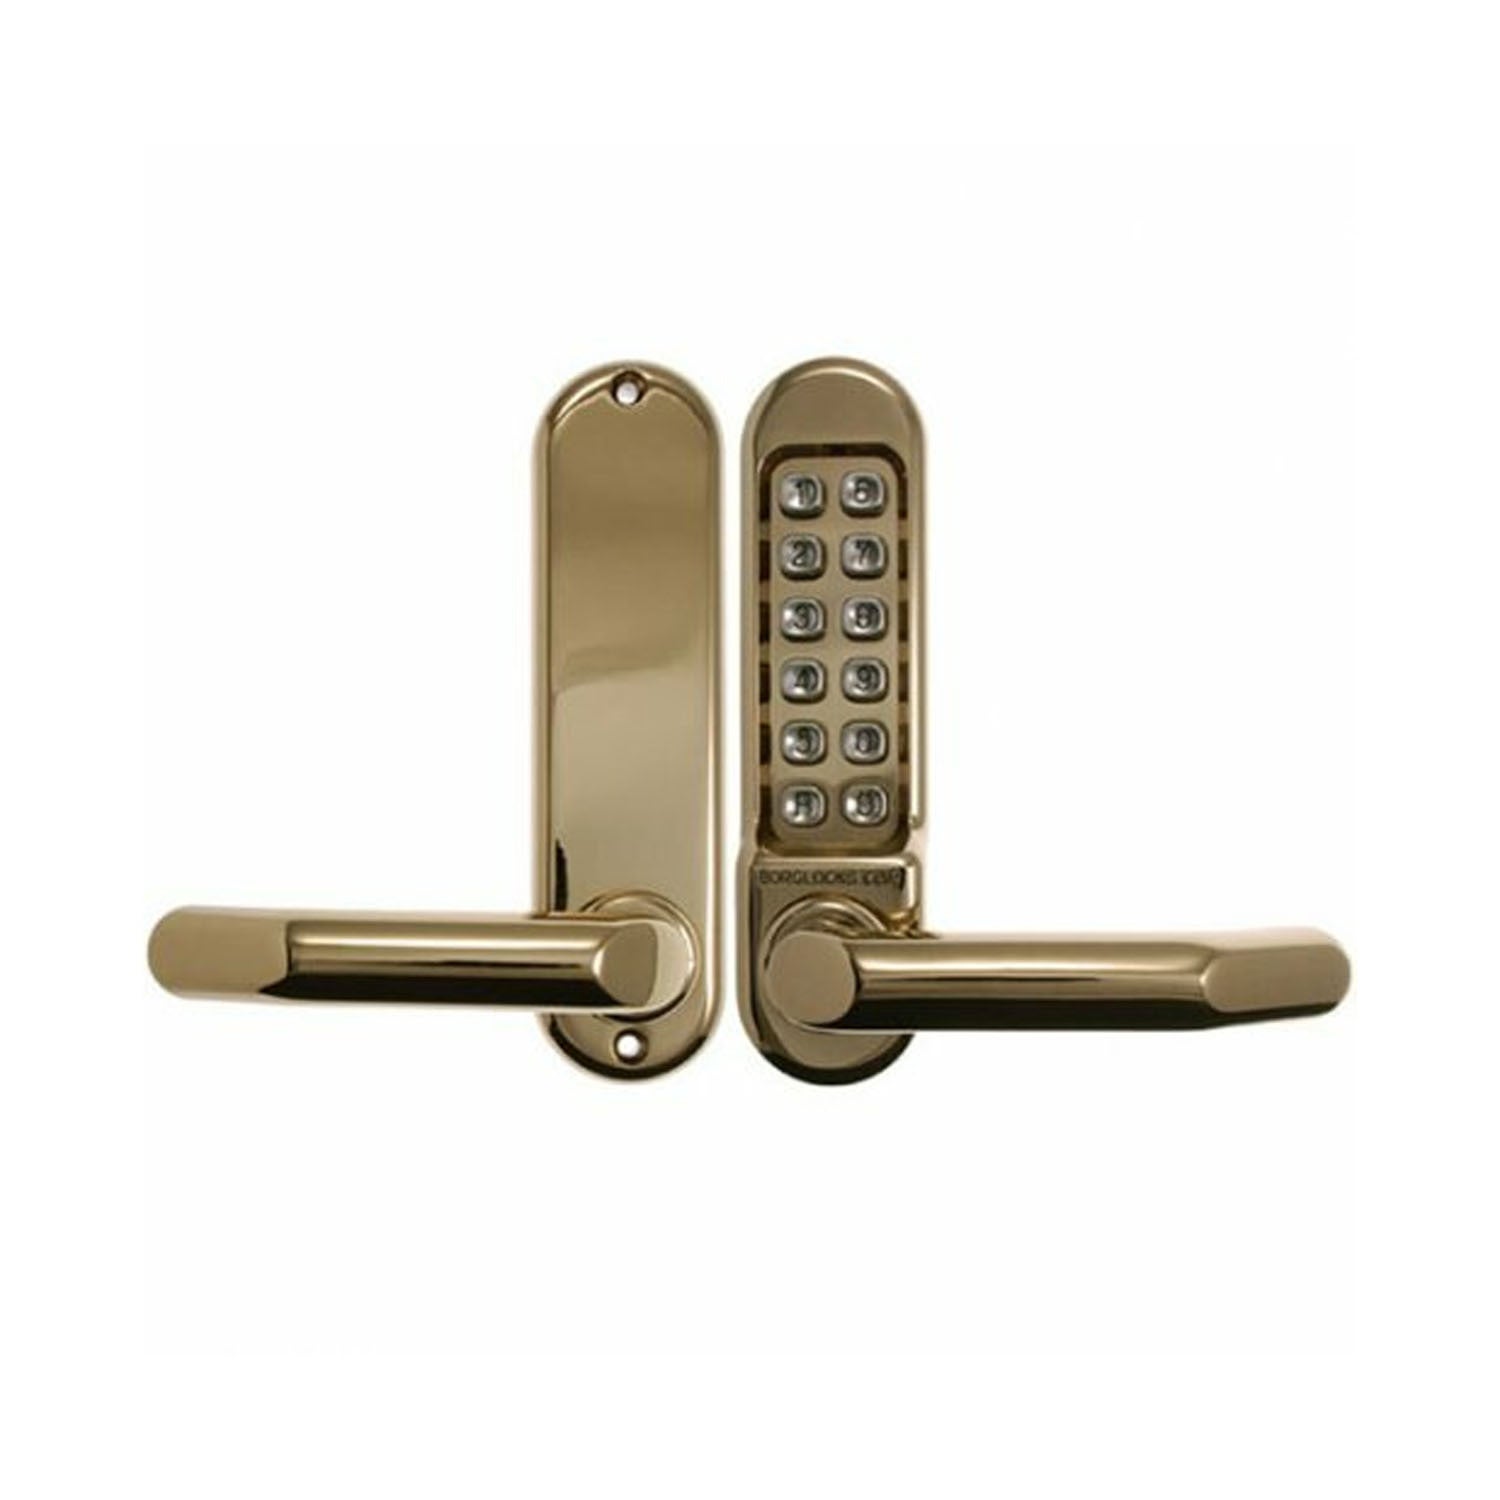 Borg Digital Door Lock Keyless Entry Fire Rated Polished Brass BL5001PB